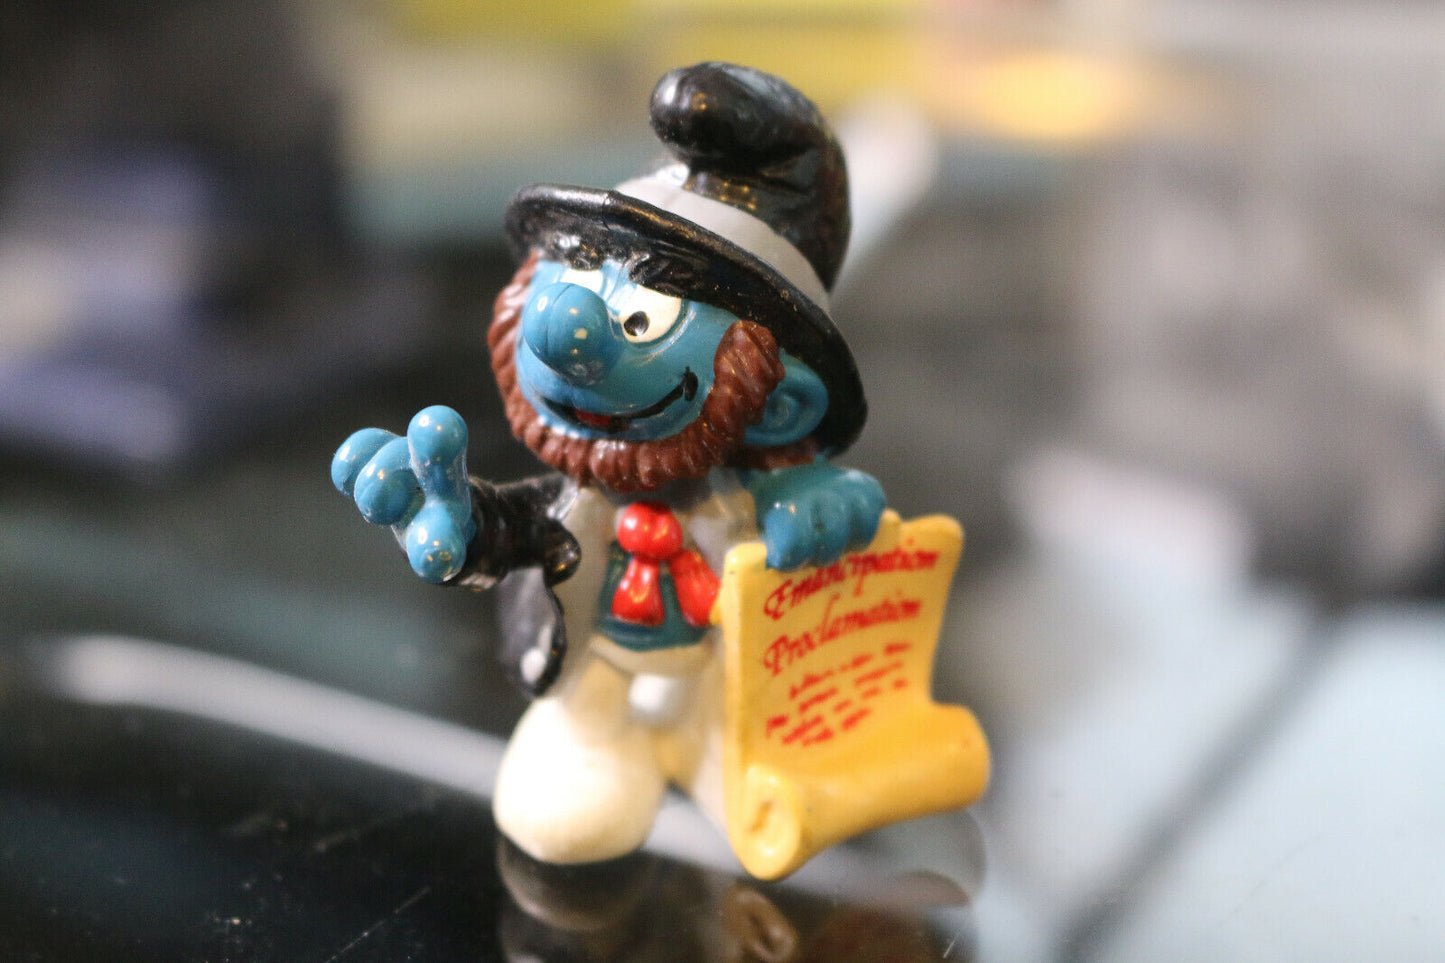 Vintage Toy Smurf 1984 Abraham Lincoln Peyo Schleich Historical Collectible Toy